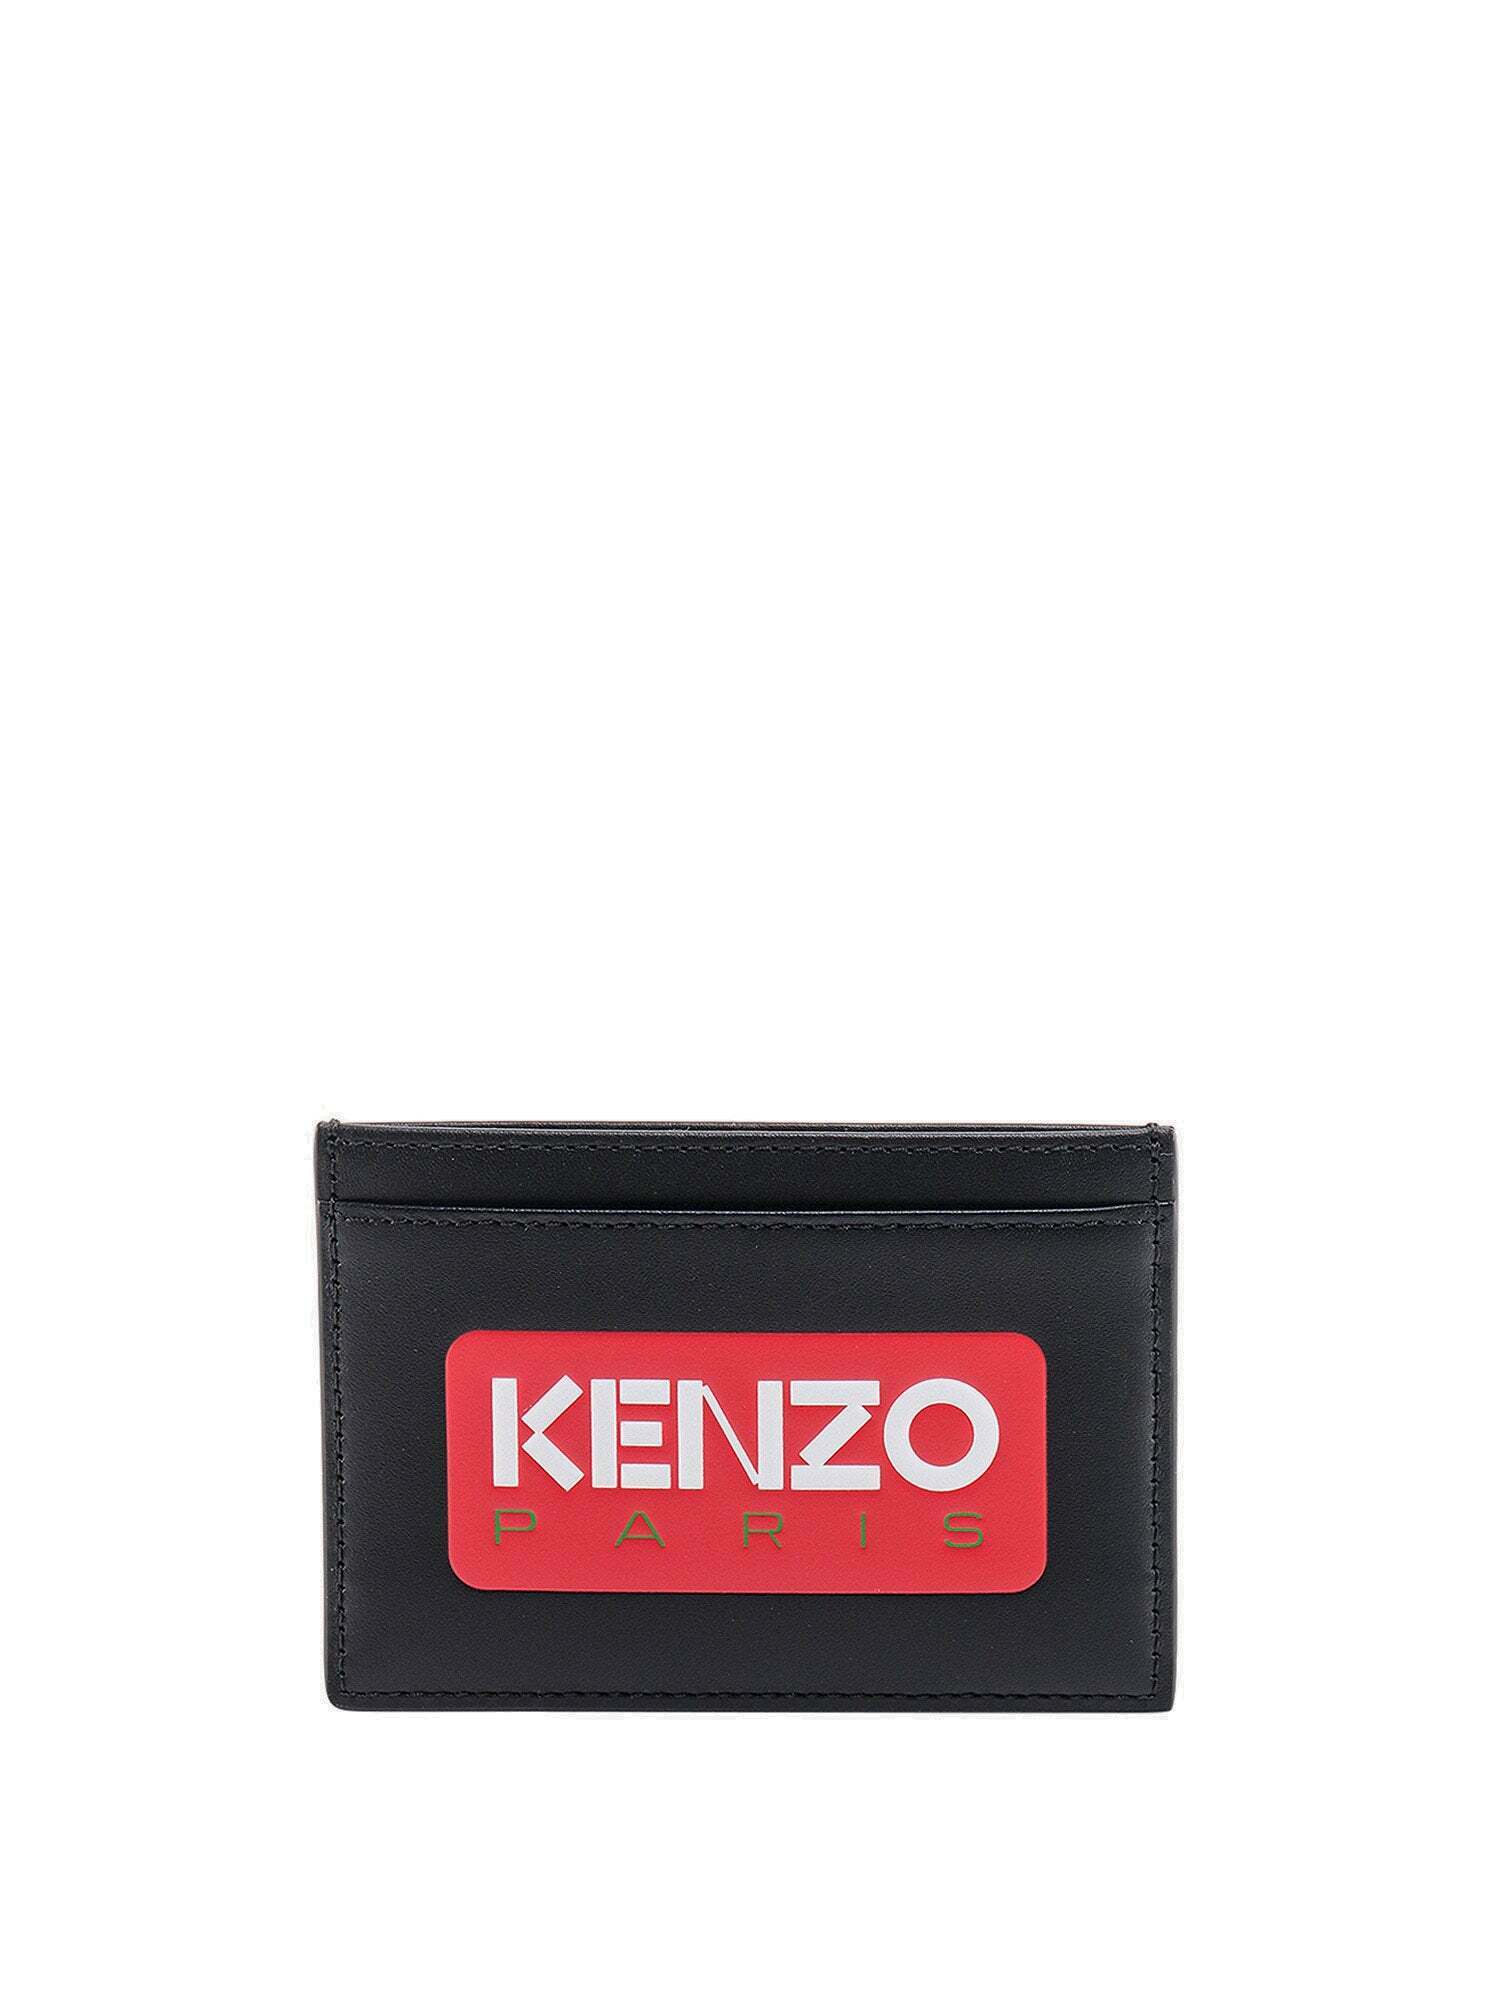 Kenzo Paris Card Holder Black Mens Kenzo